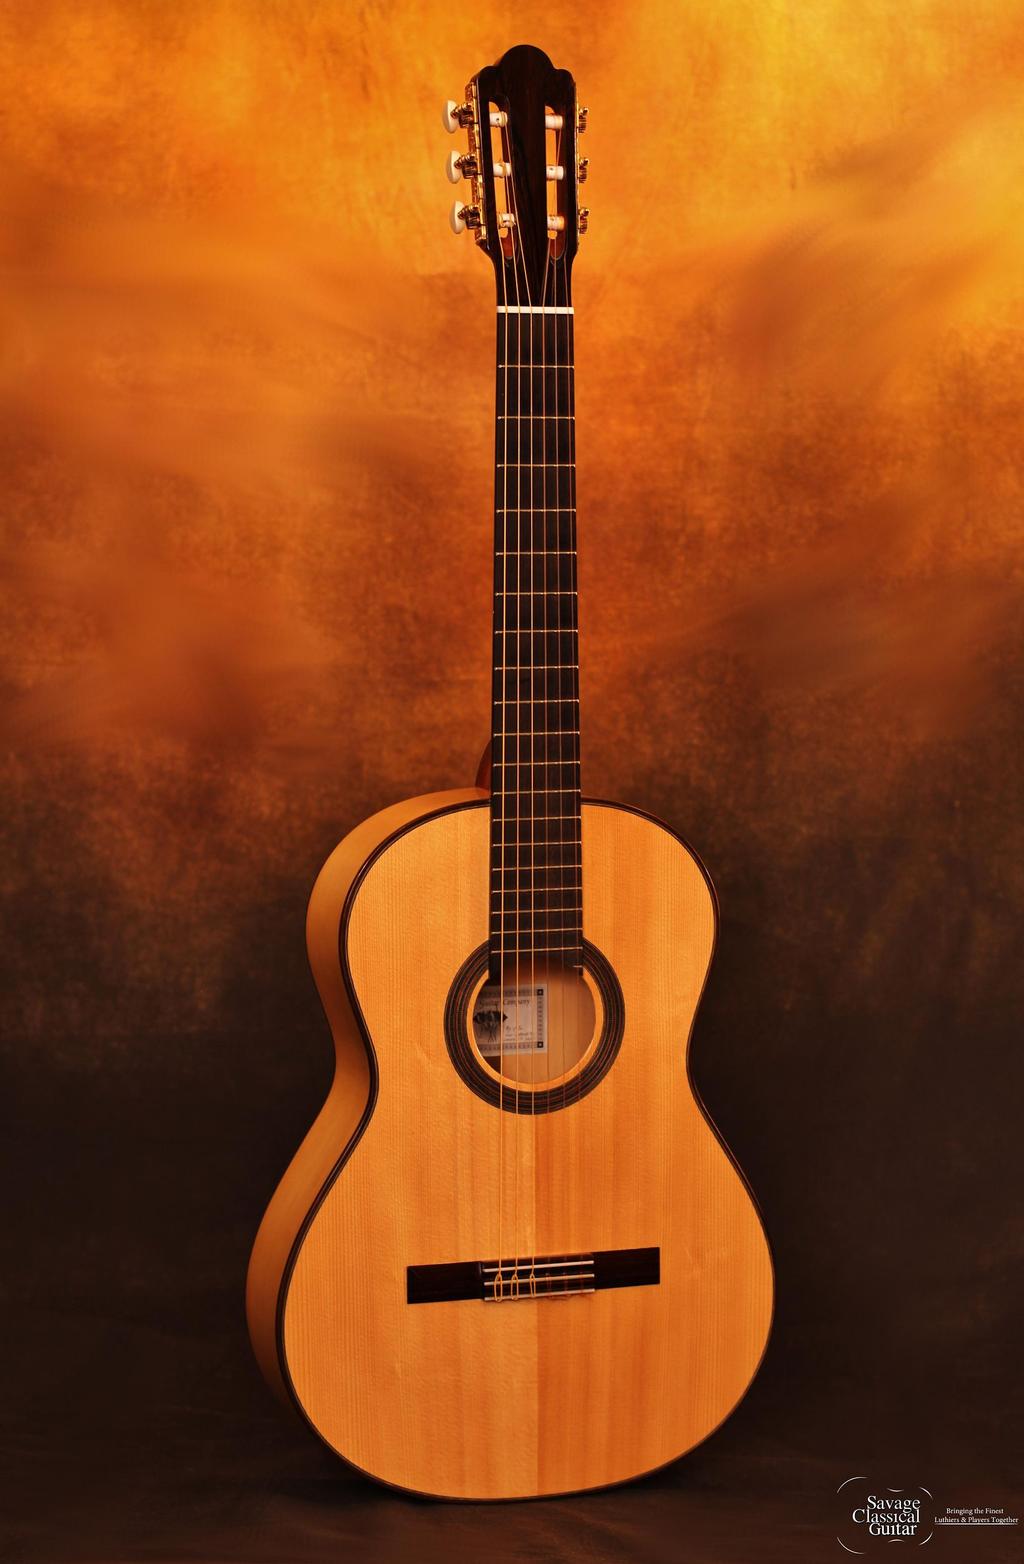 Bossa Nova Instruments Guitar is the most common instrument.